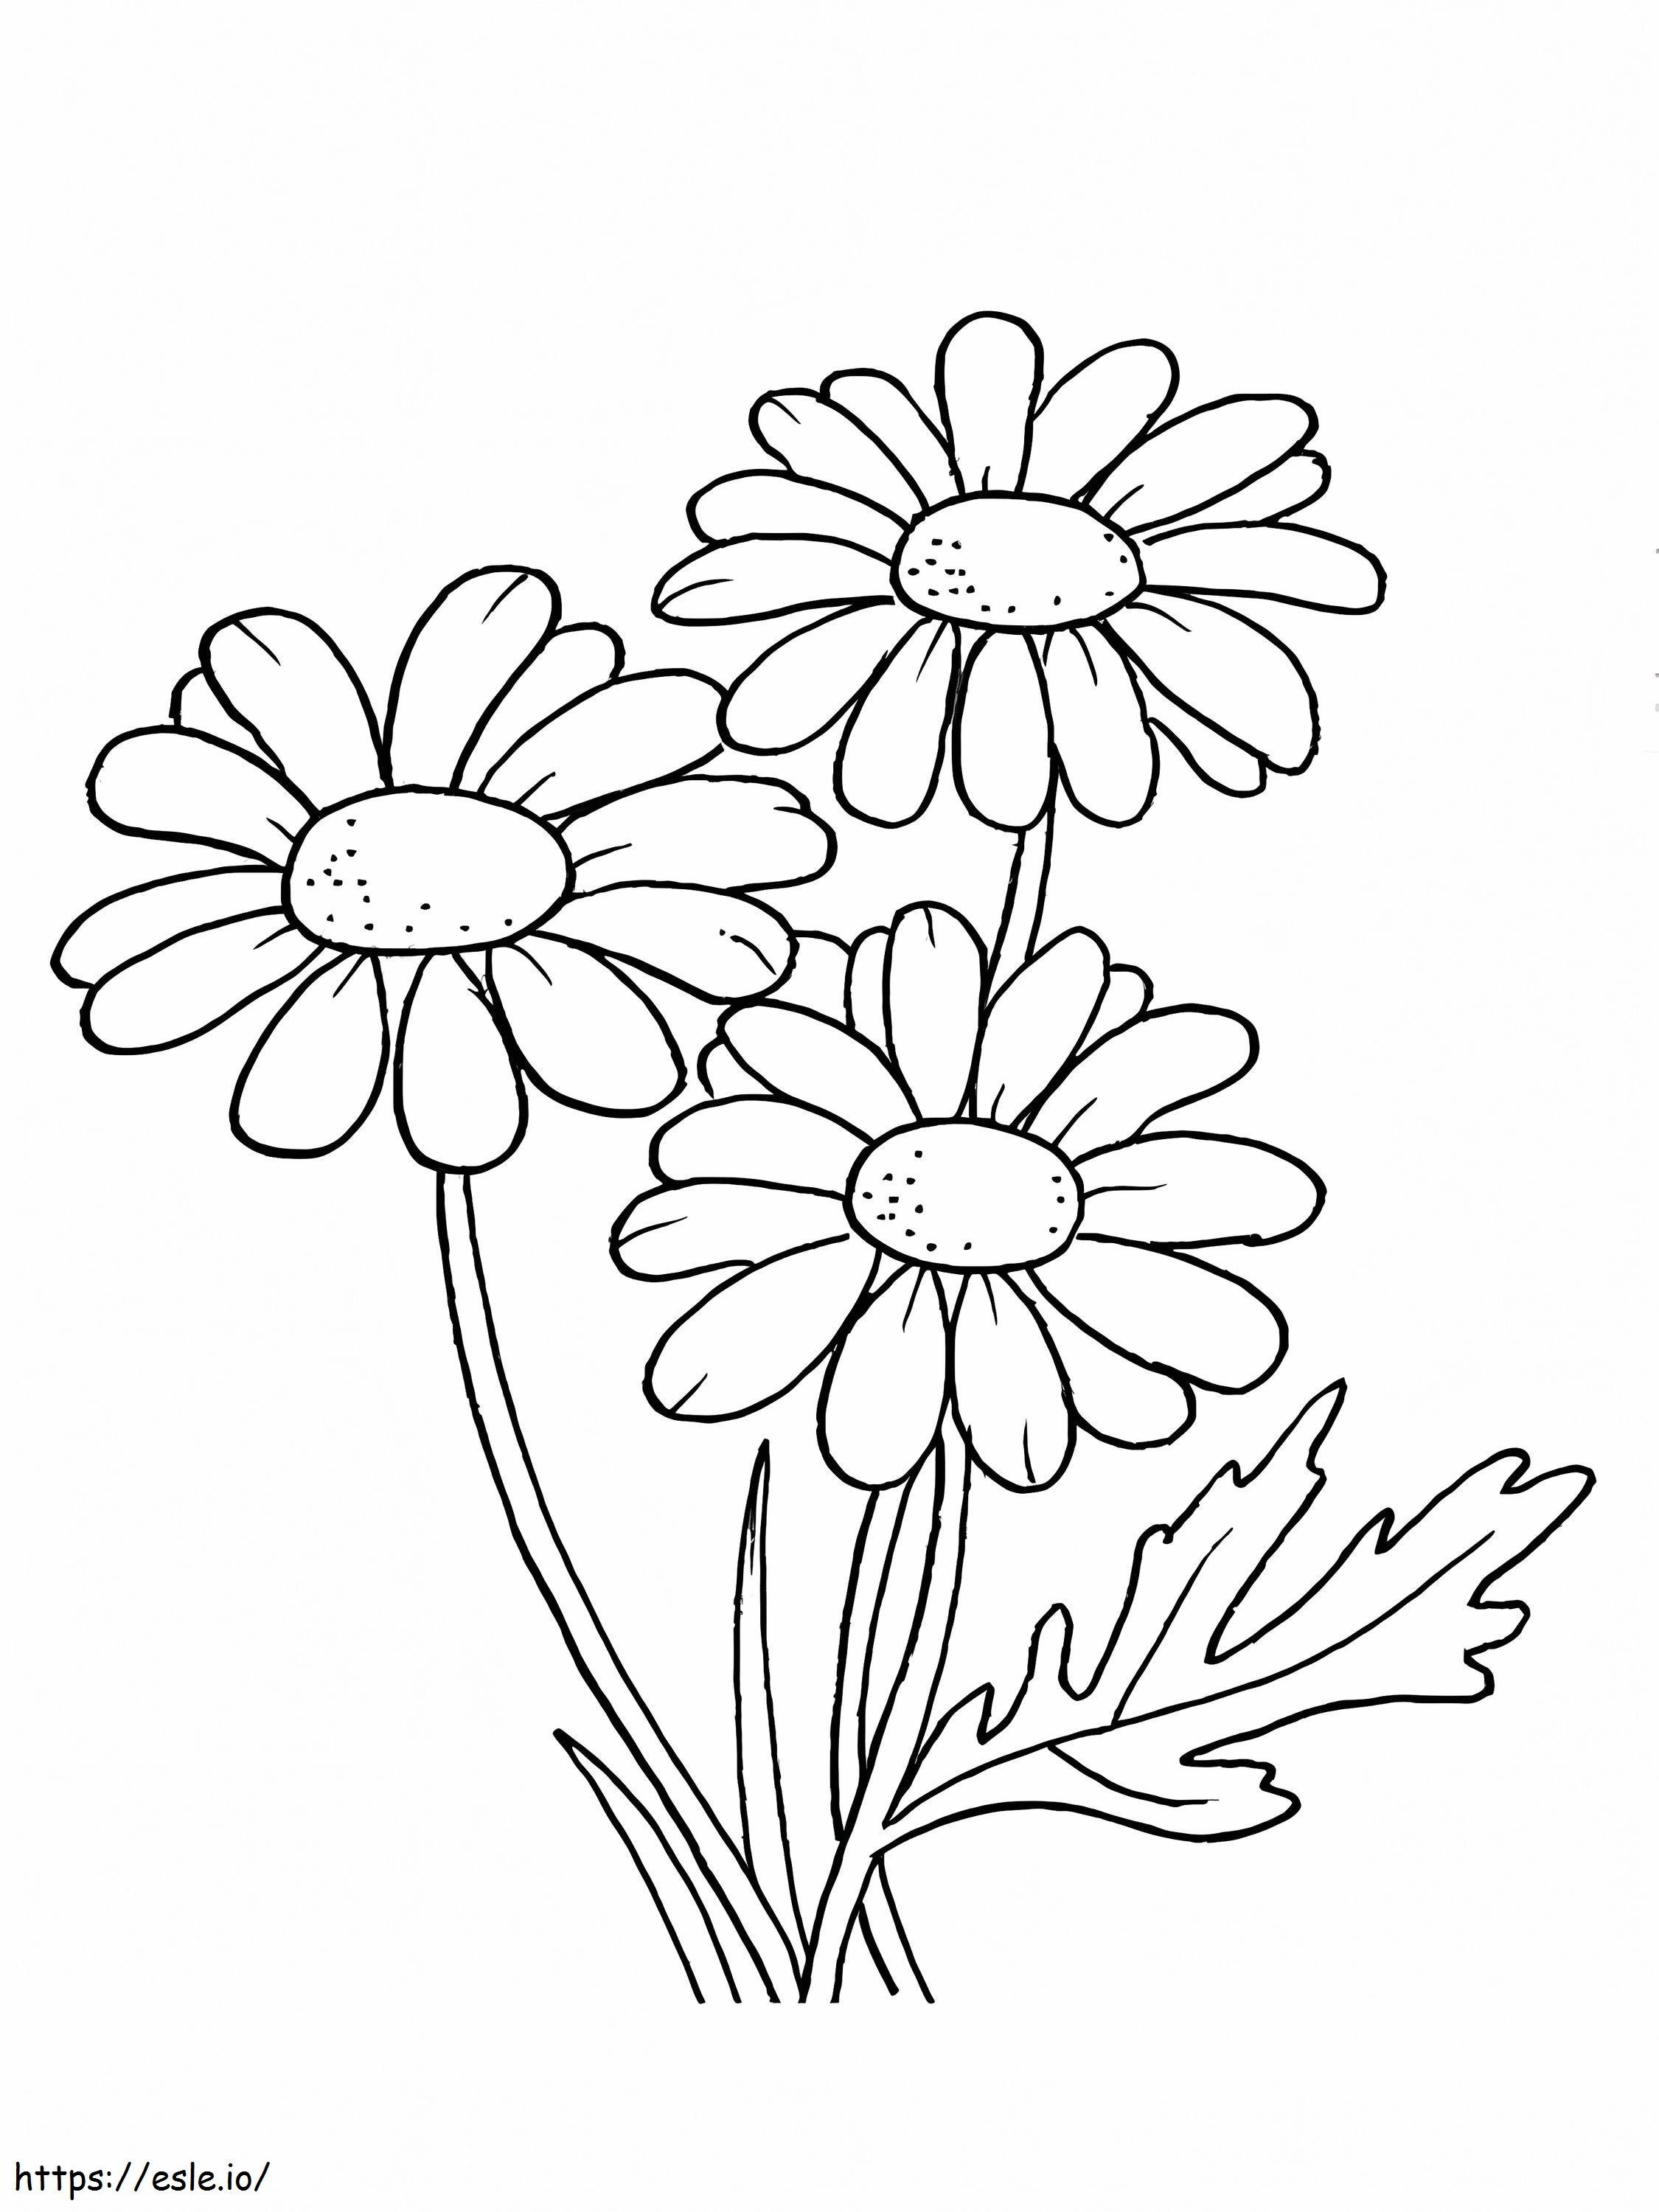 Three Daisies coloring page